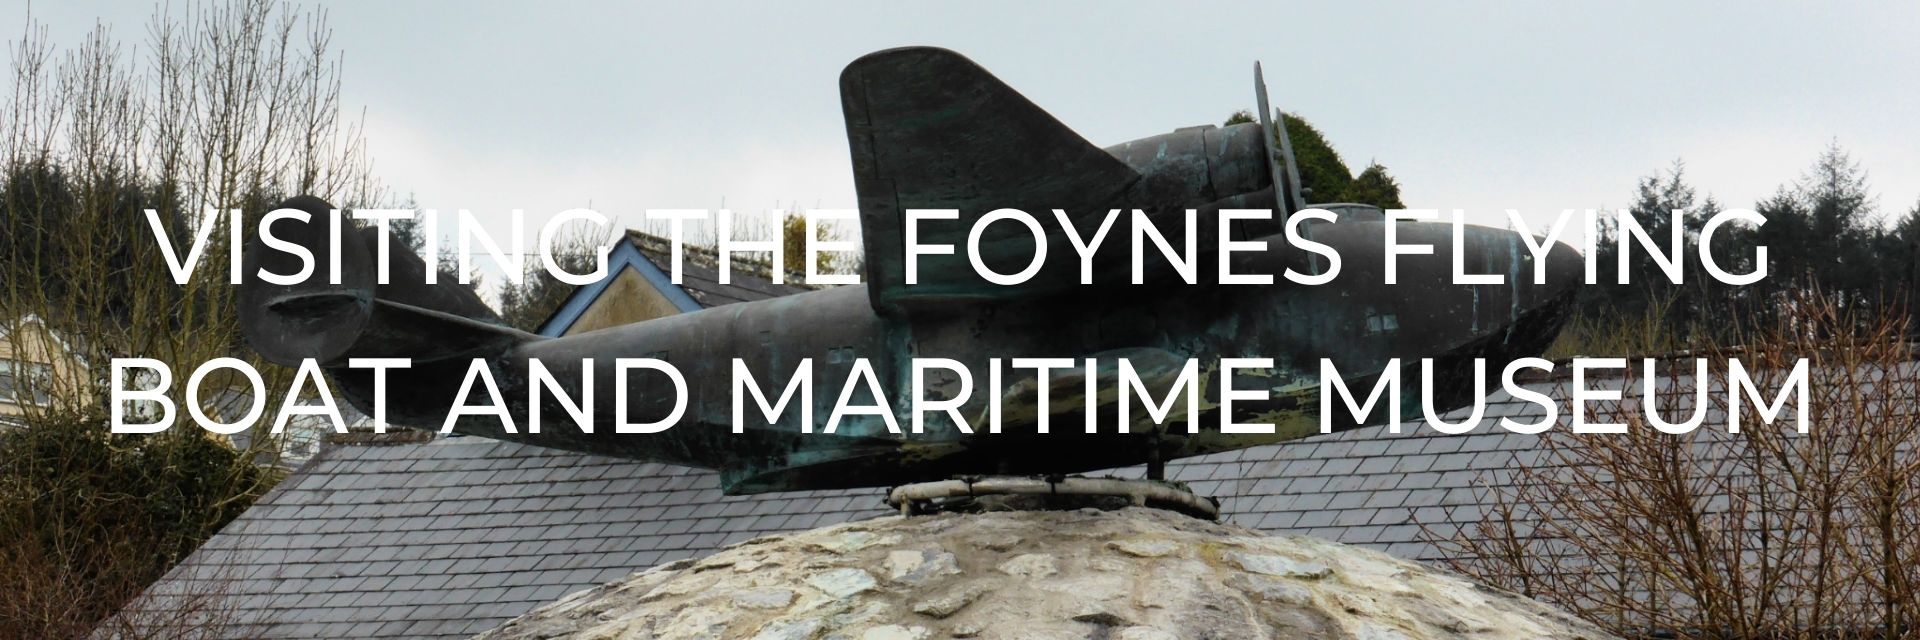 Foynes Flying Boat and Maritime Museum Desktop Header